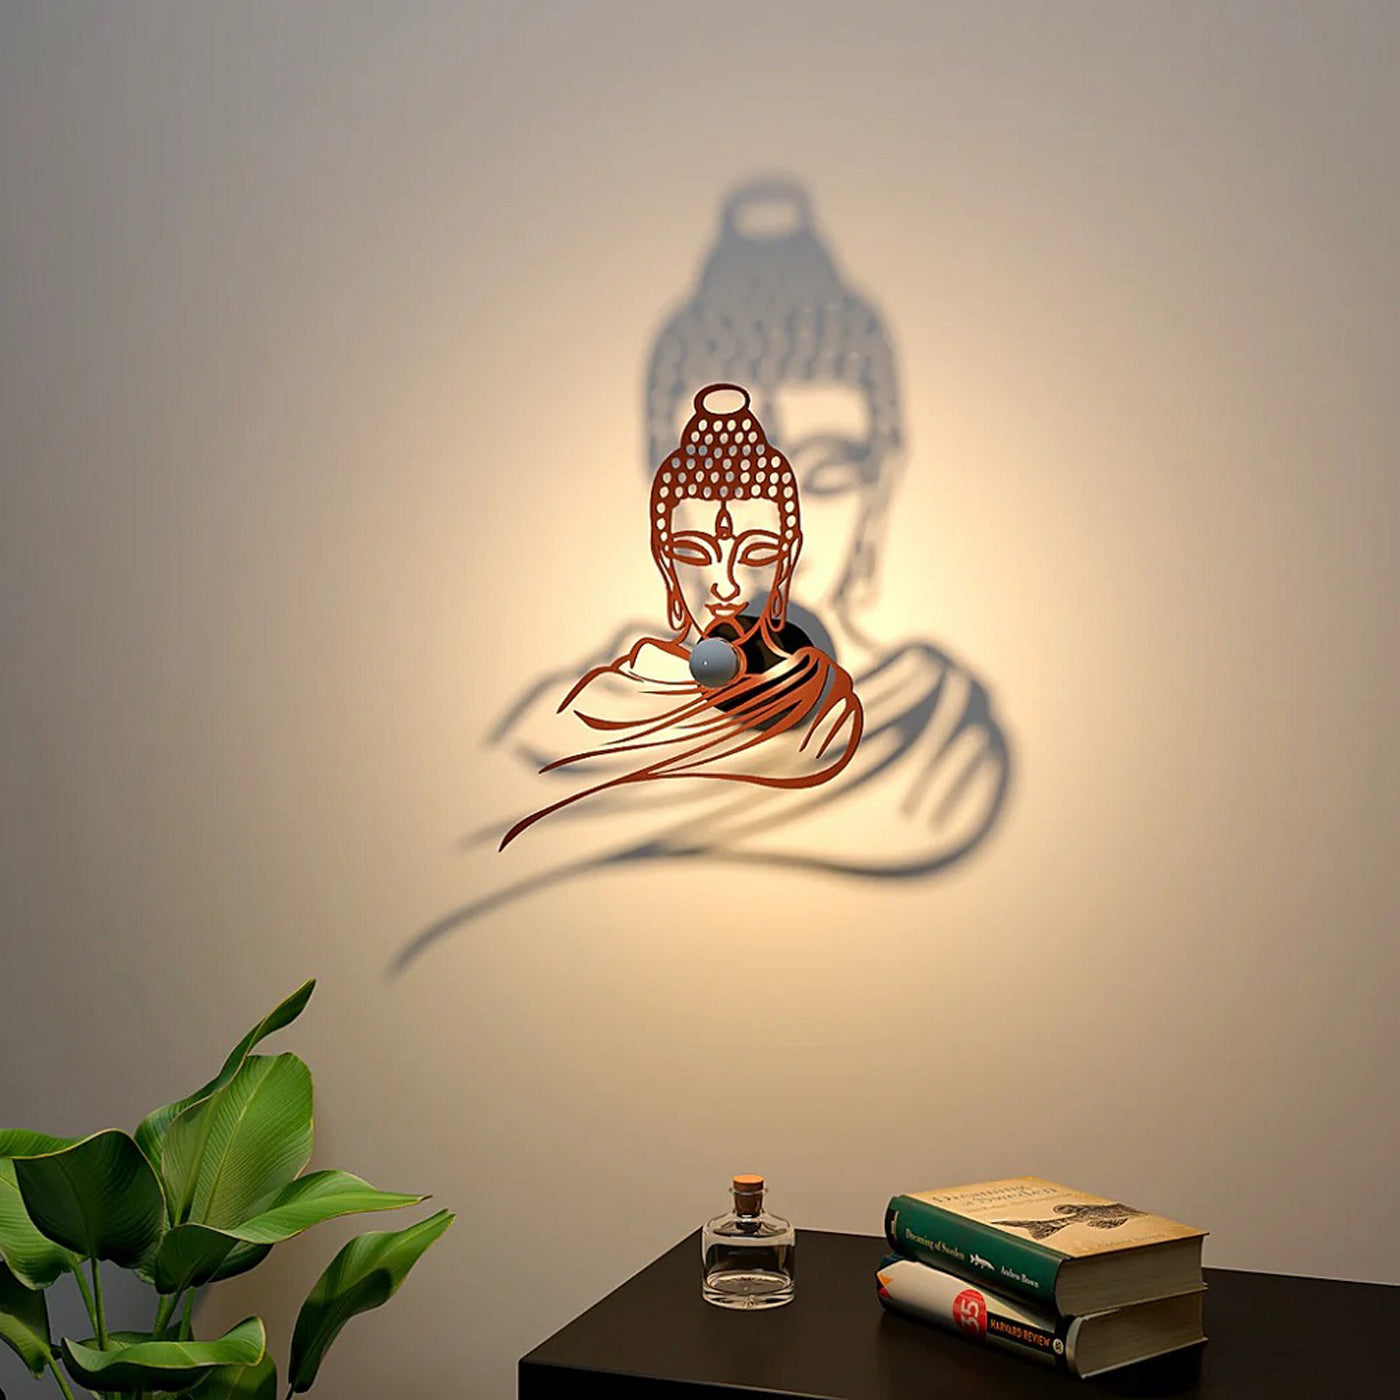 Buddha Shadow Lamp For Home / Office Wall decor